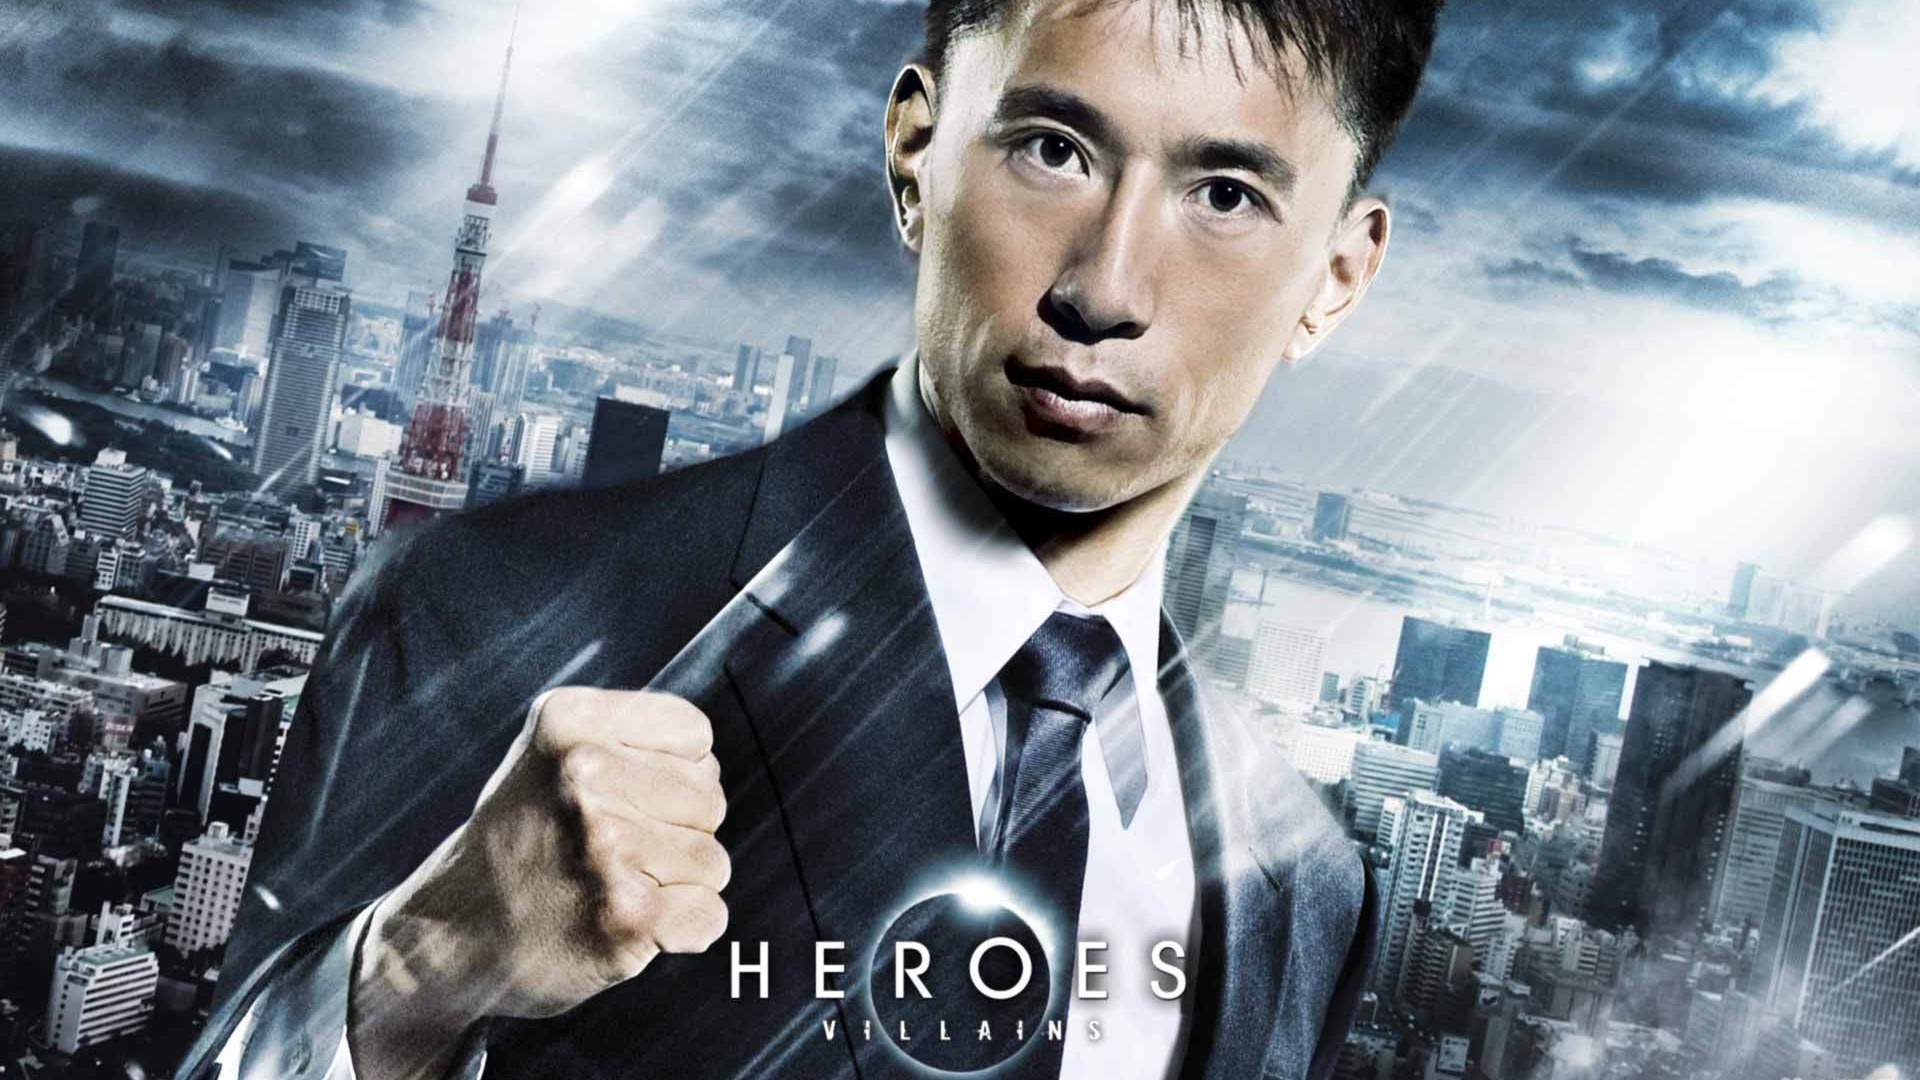 Heroes wallpaper 7